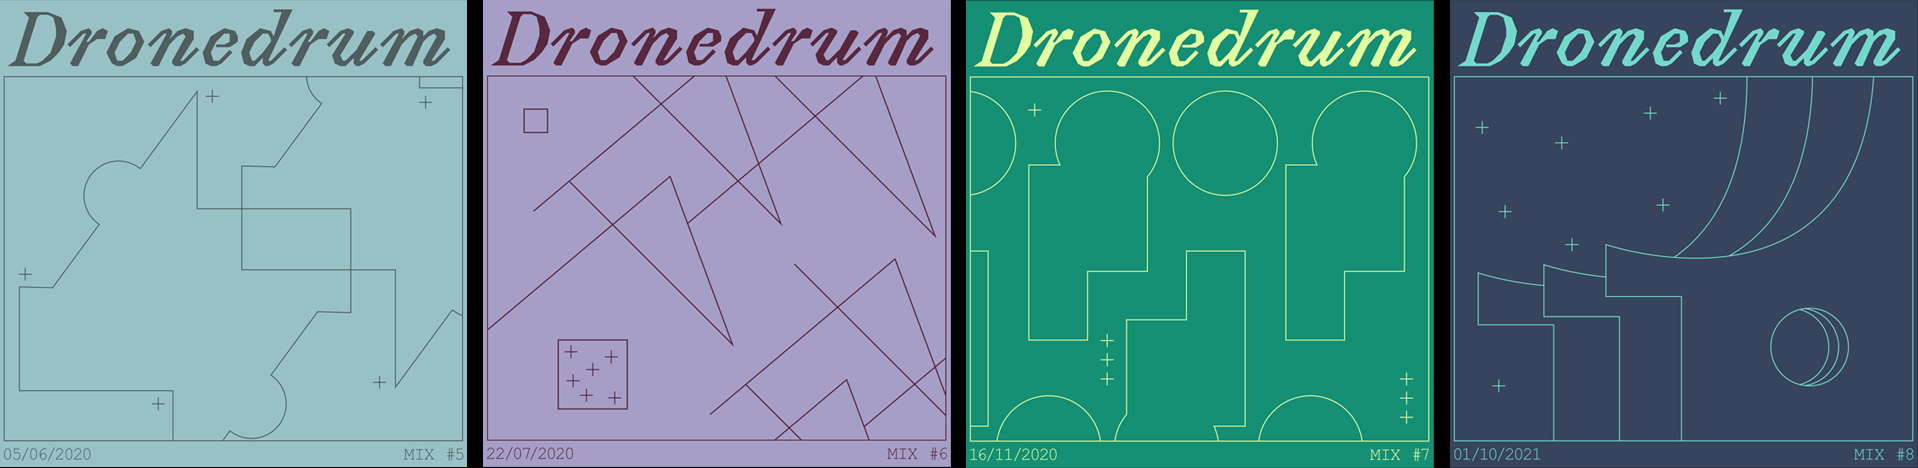 Dronedrum Covers